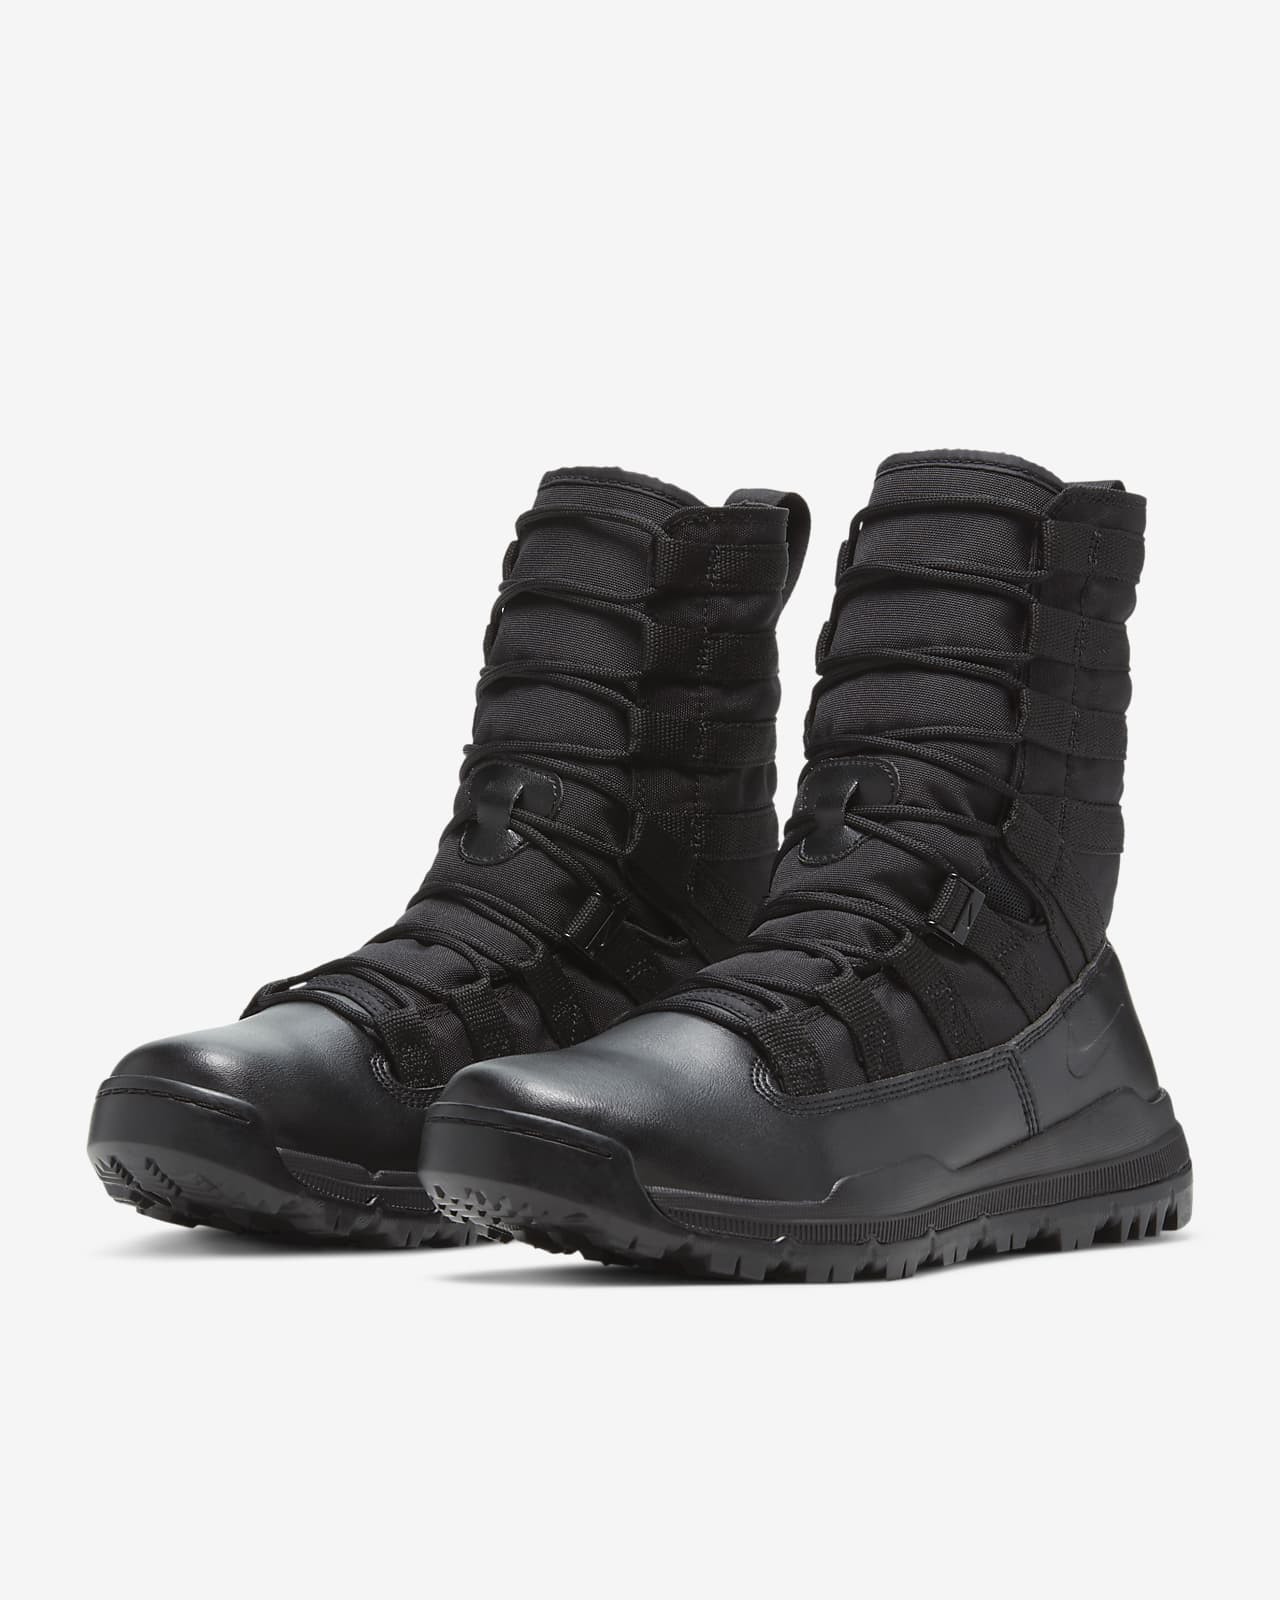 nike boots black